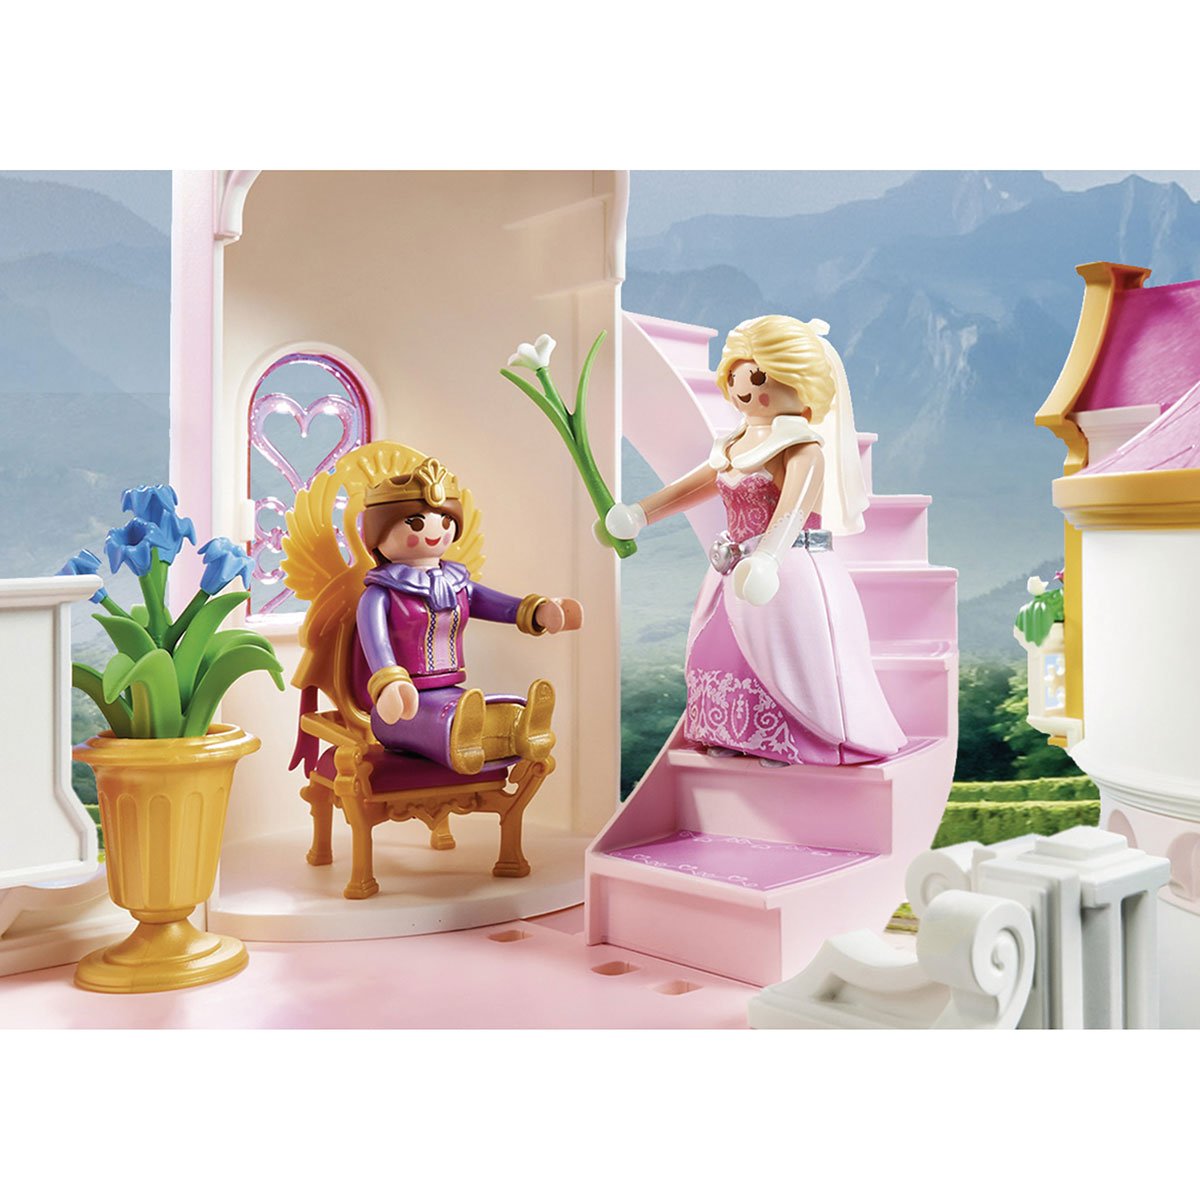 ▷ Playmobil Princess Grand palais de princesse